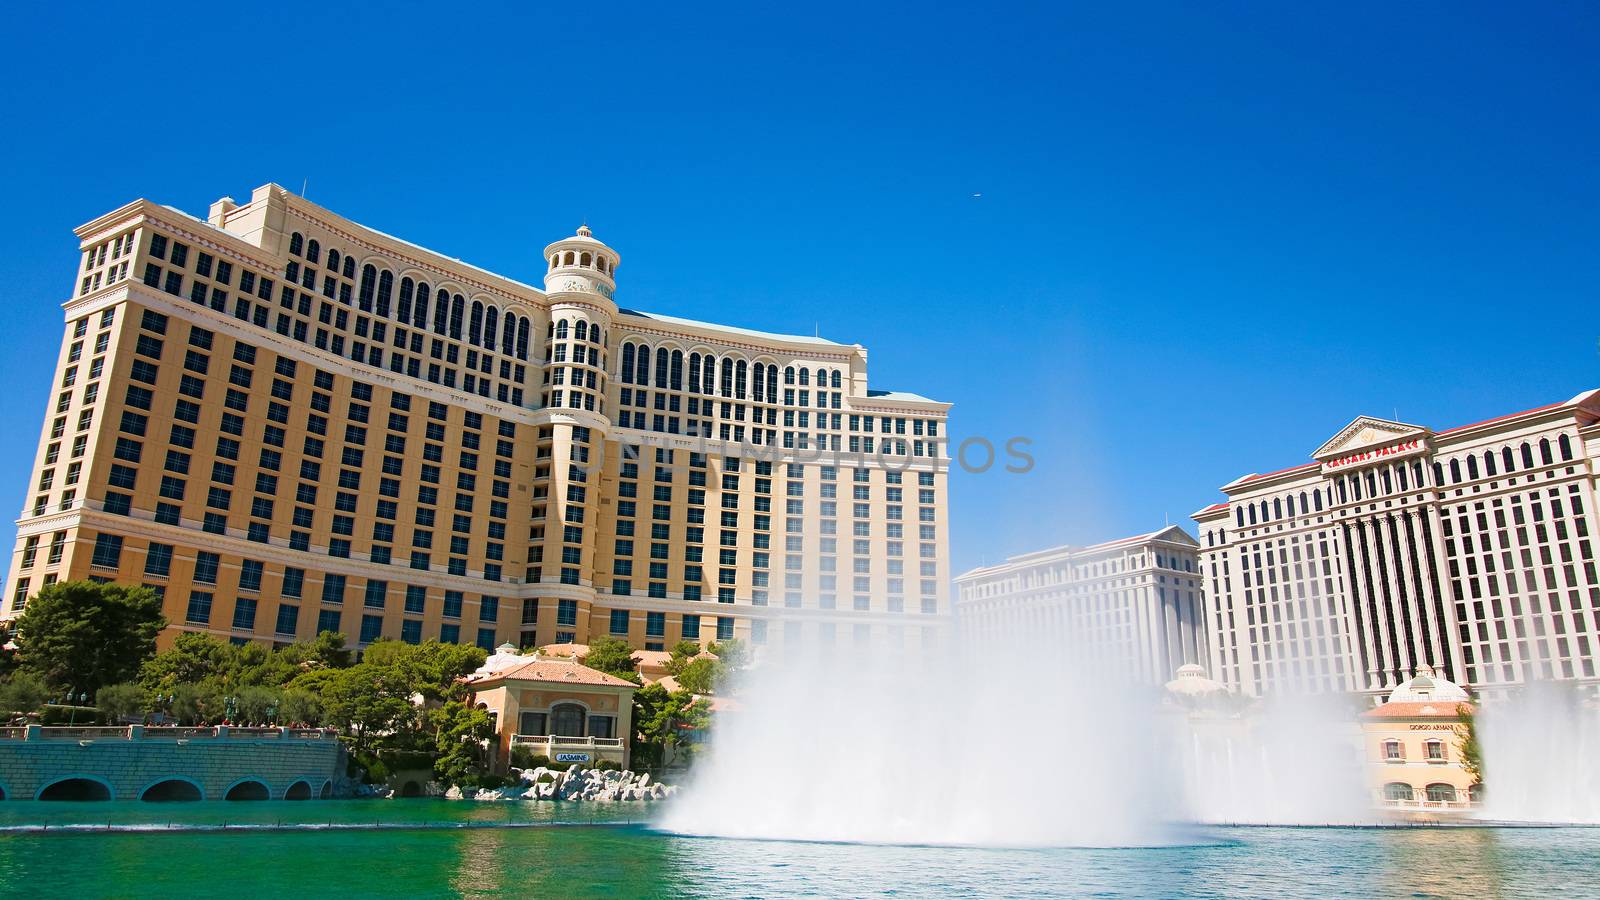 Fountains of Bellagio in Las Vegas by USA-TARO